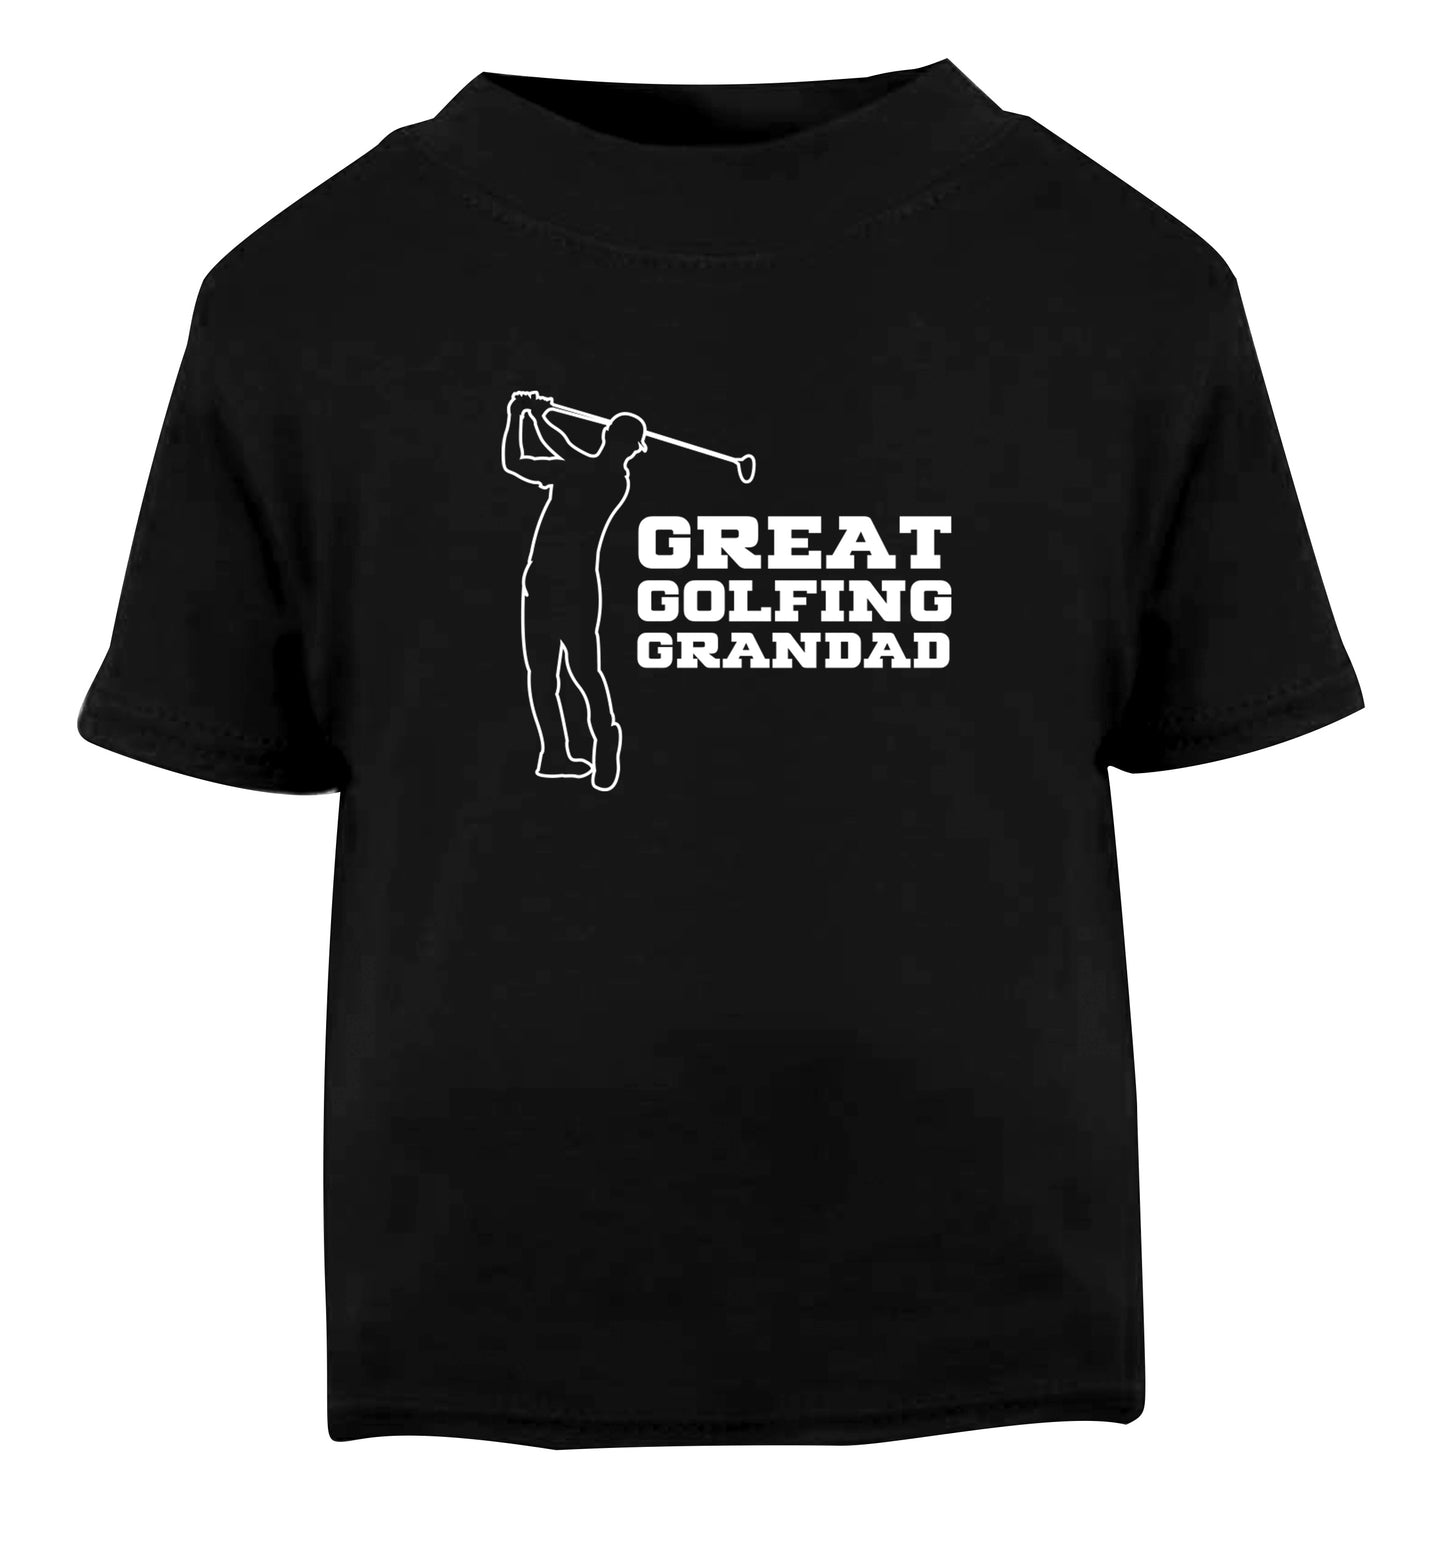 Great Golfing Grandad Black Baby Toddler Tshirt 2 years